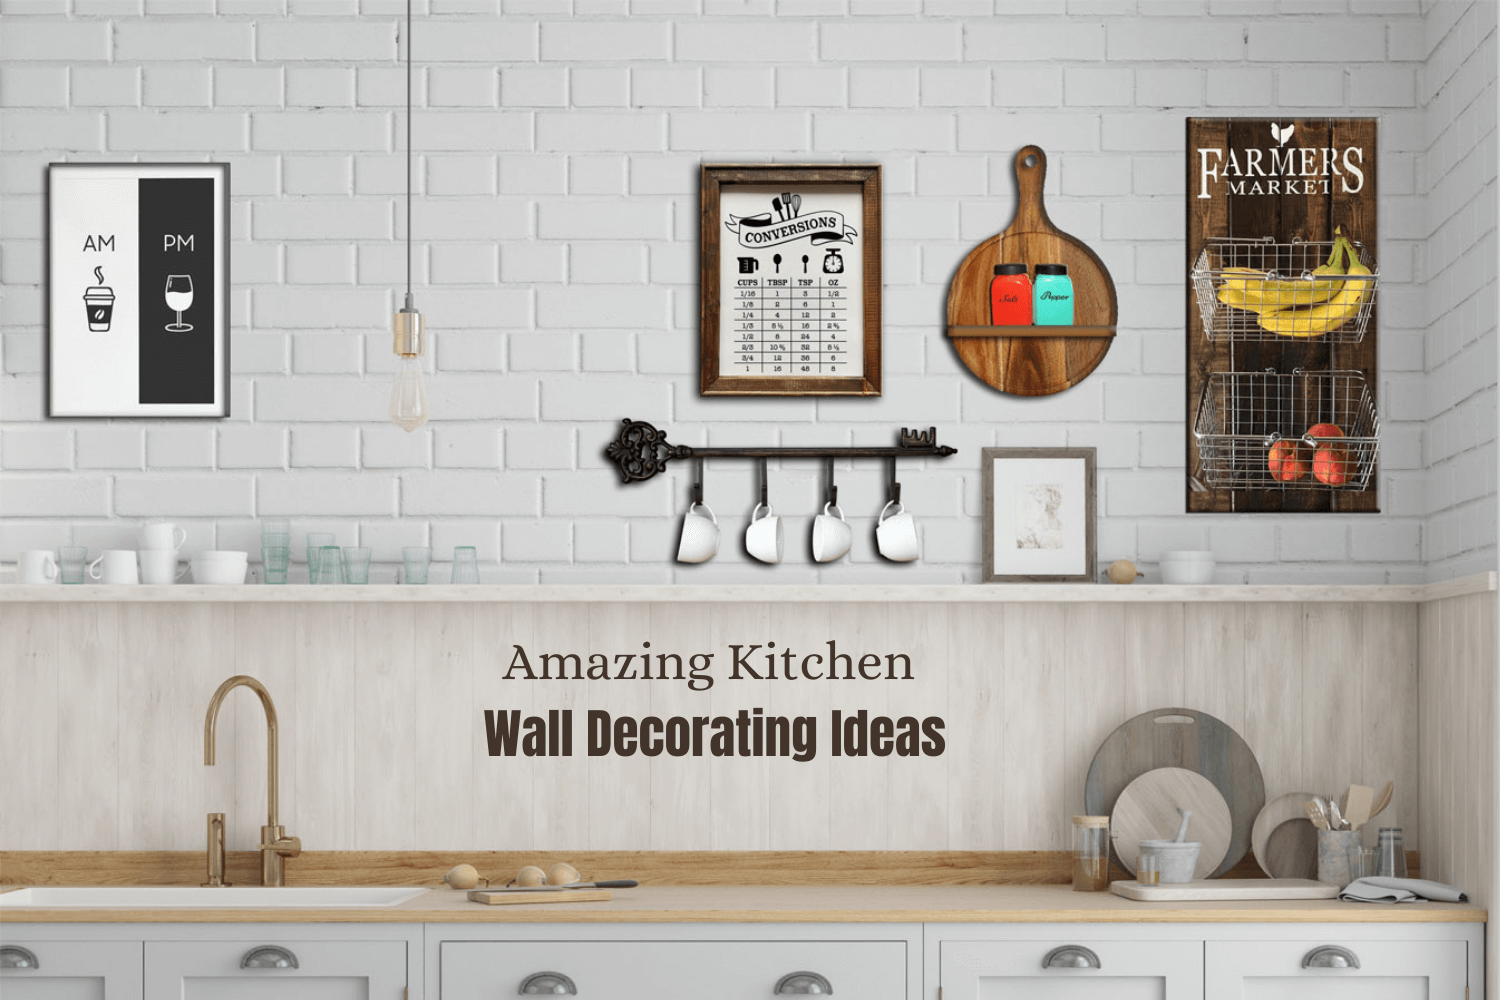 4 Amazing Kitchen Wall Decorating Ideas